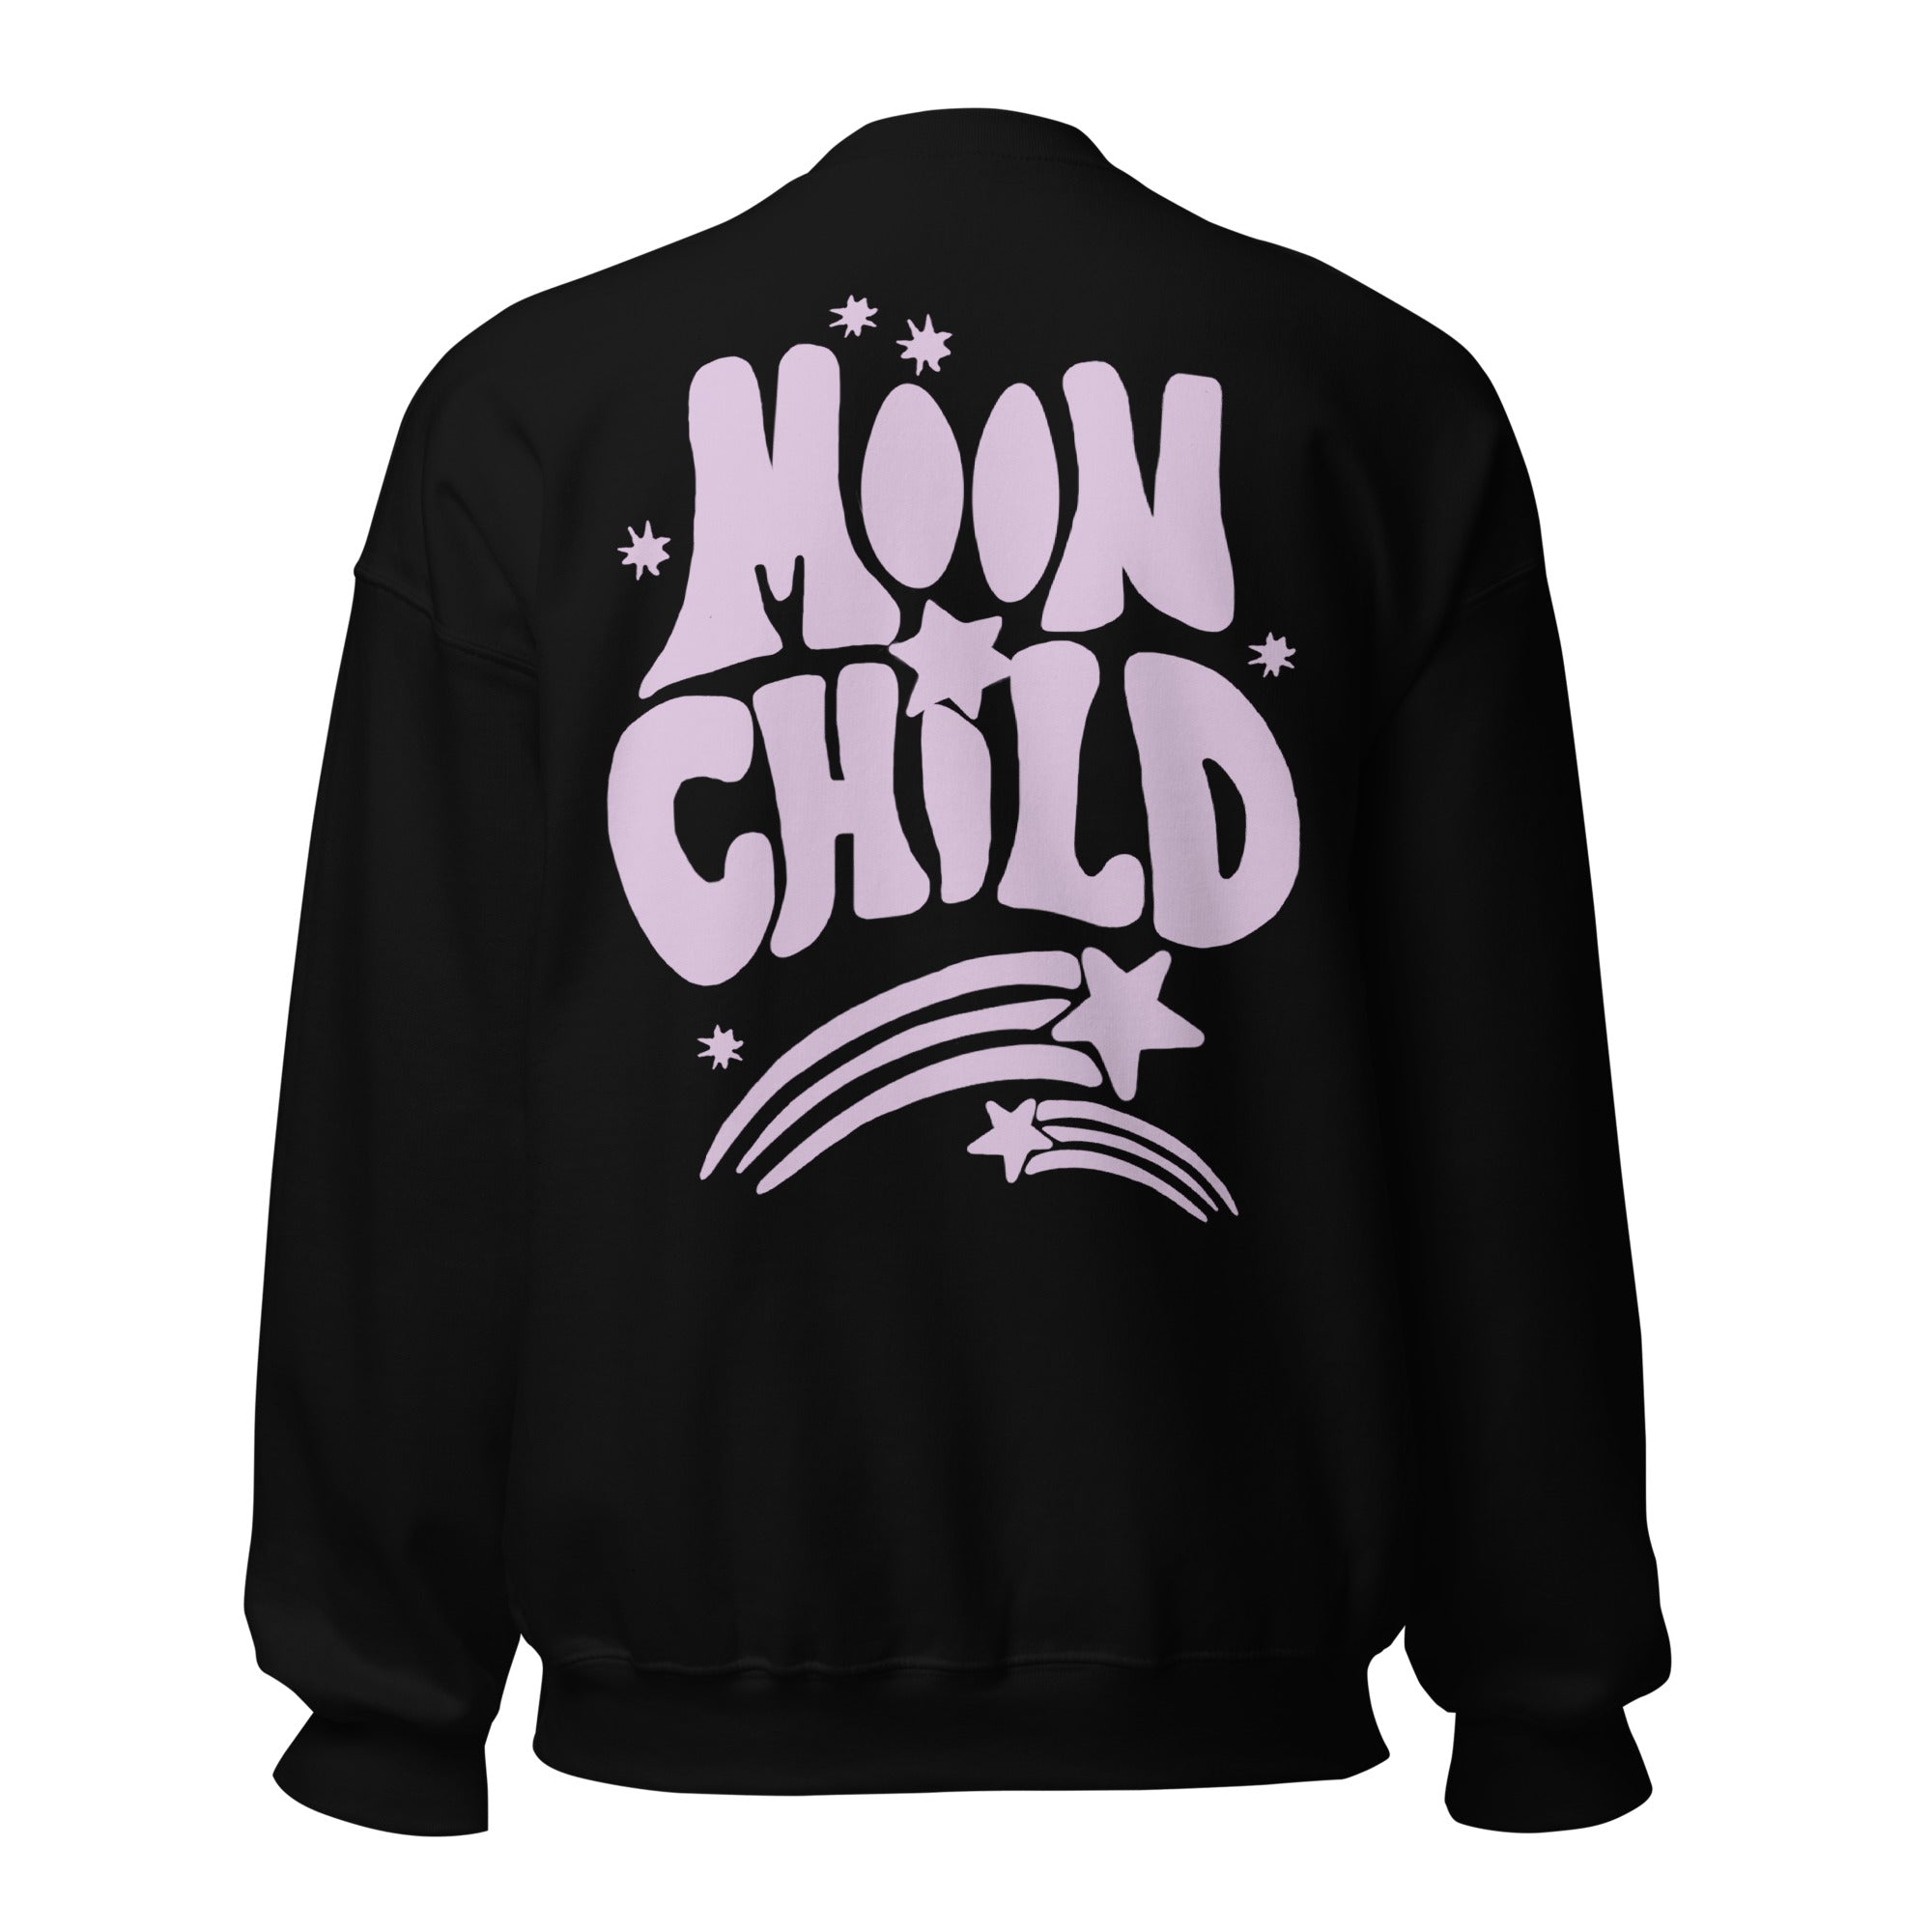 Moon Child ☾ Sweatshirt